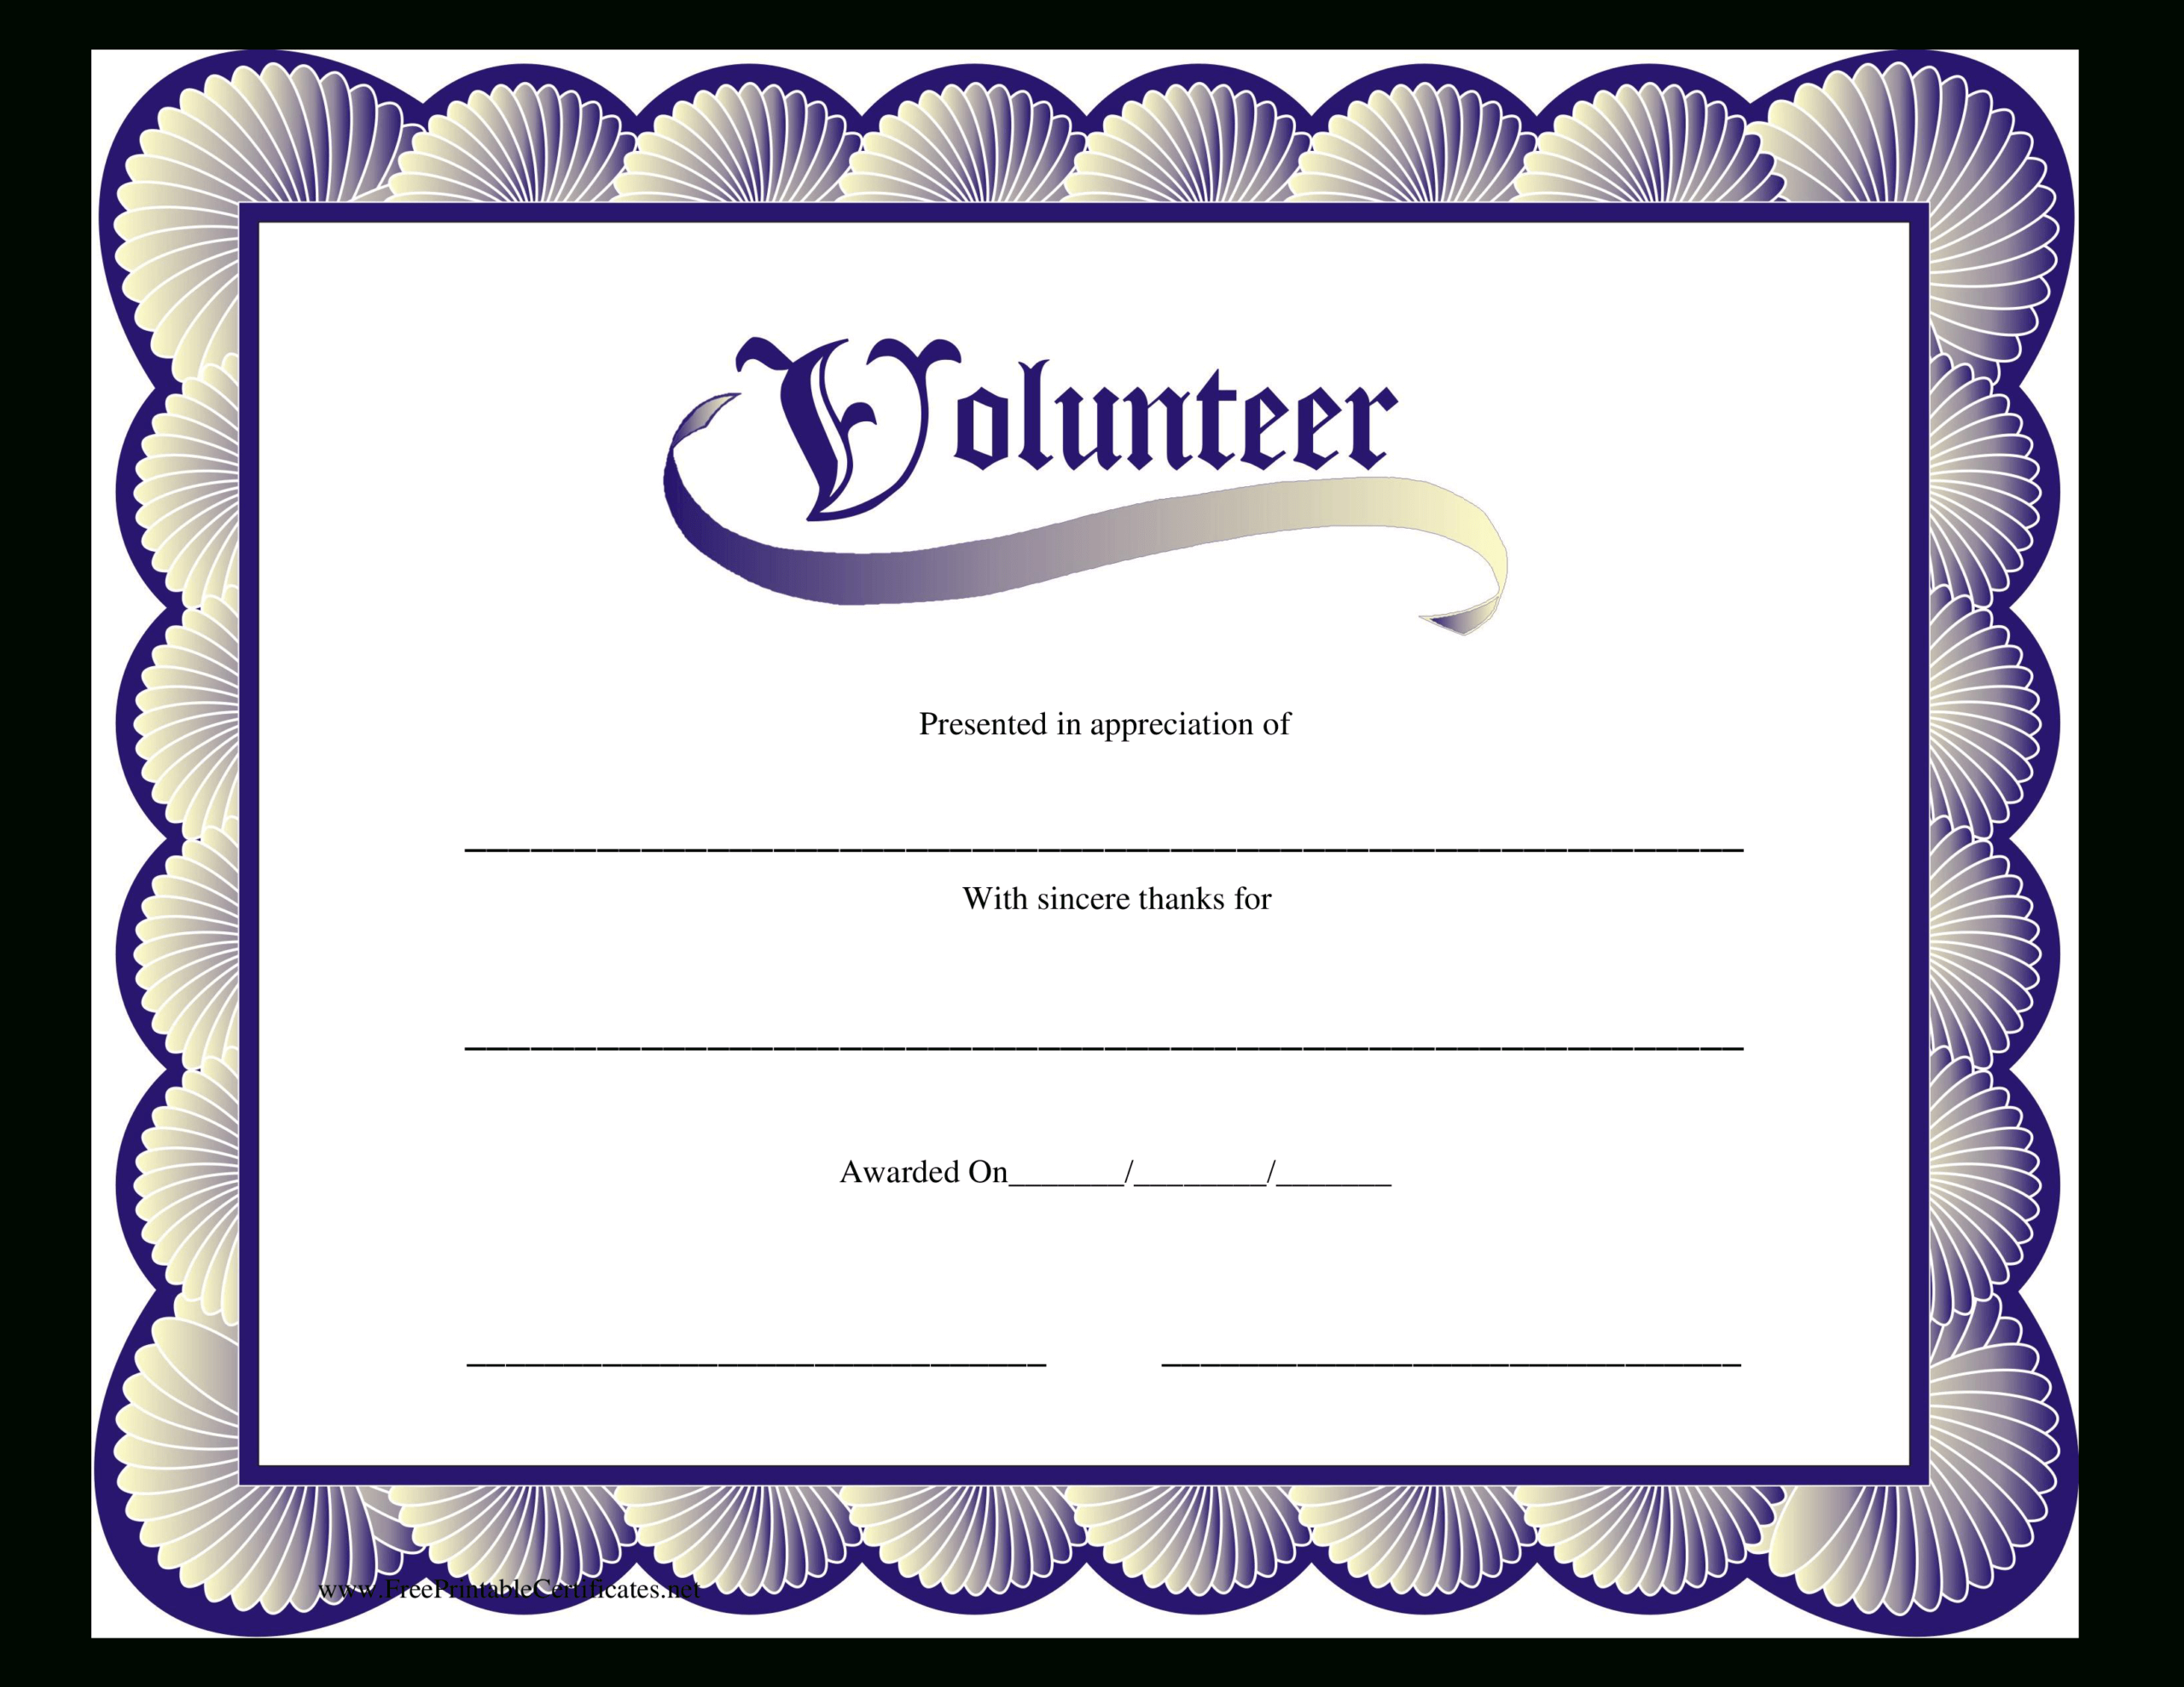 Volunteer Certificate | Templates At Allbusinesstemplates Within Volunteer Of The Year Certificate Template